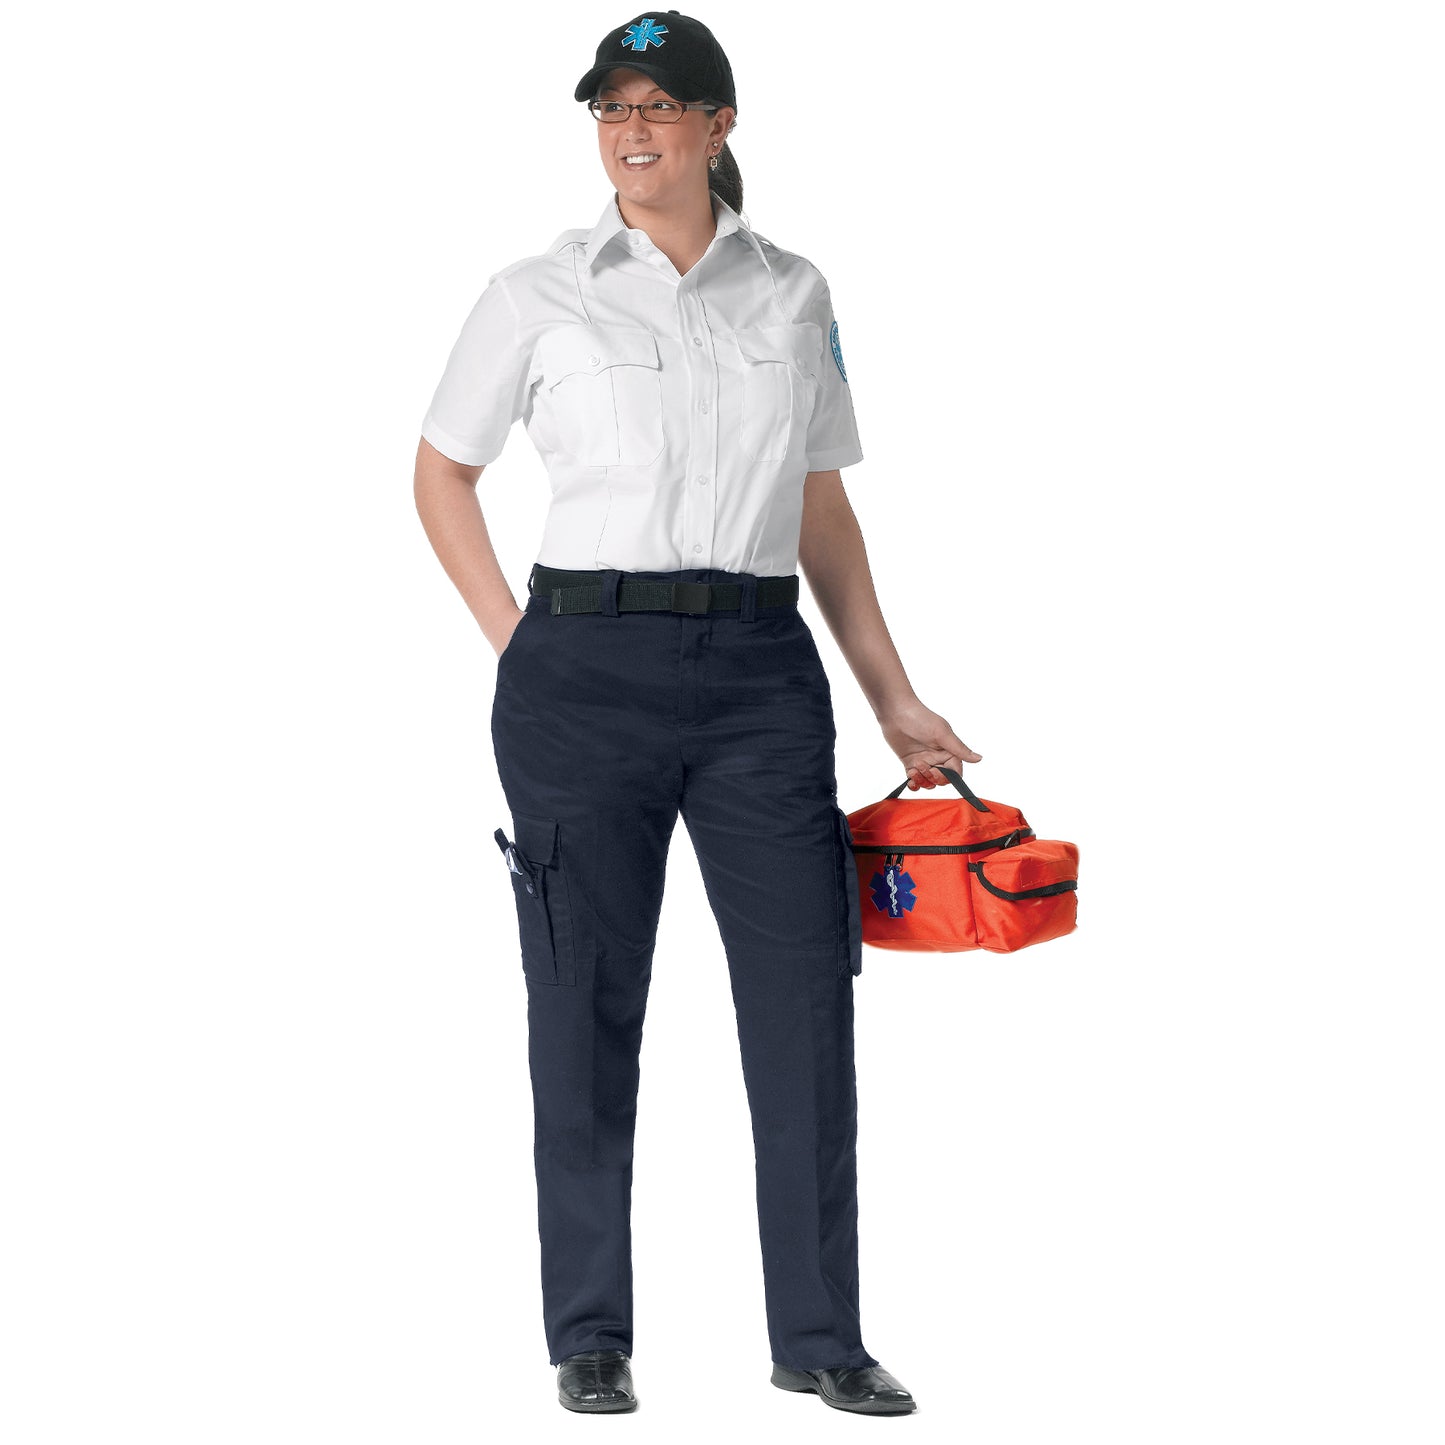 Women EMT Pants